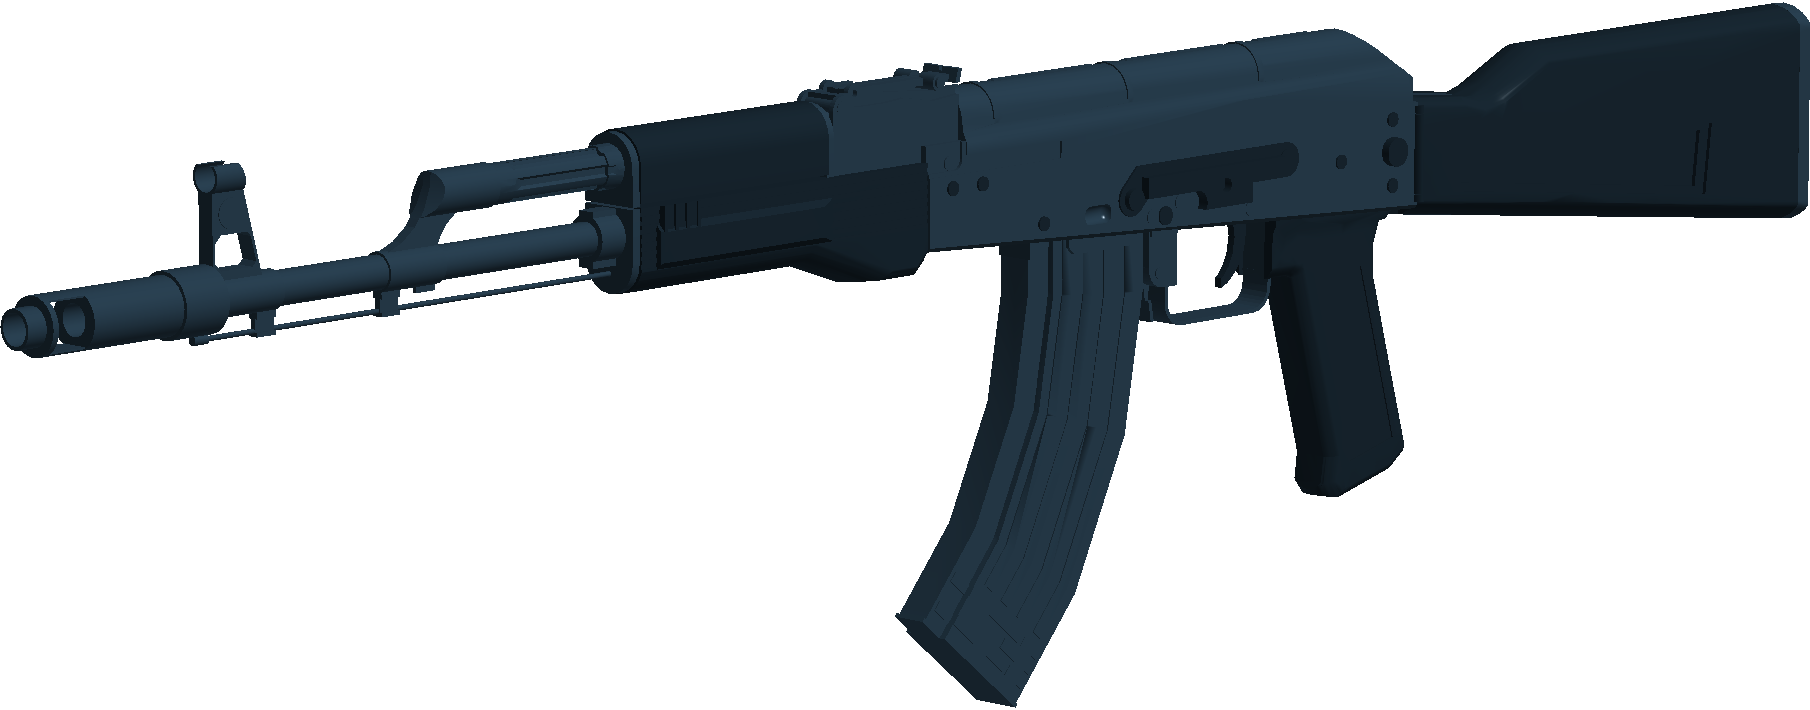 Best AK47 setup in Phantom Forces ROblox 